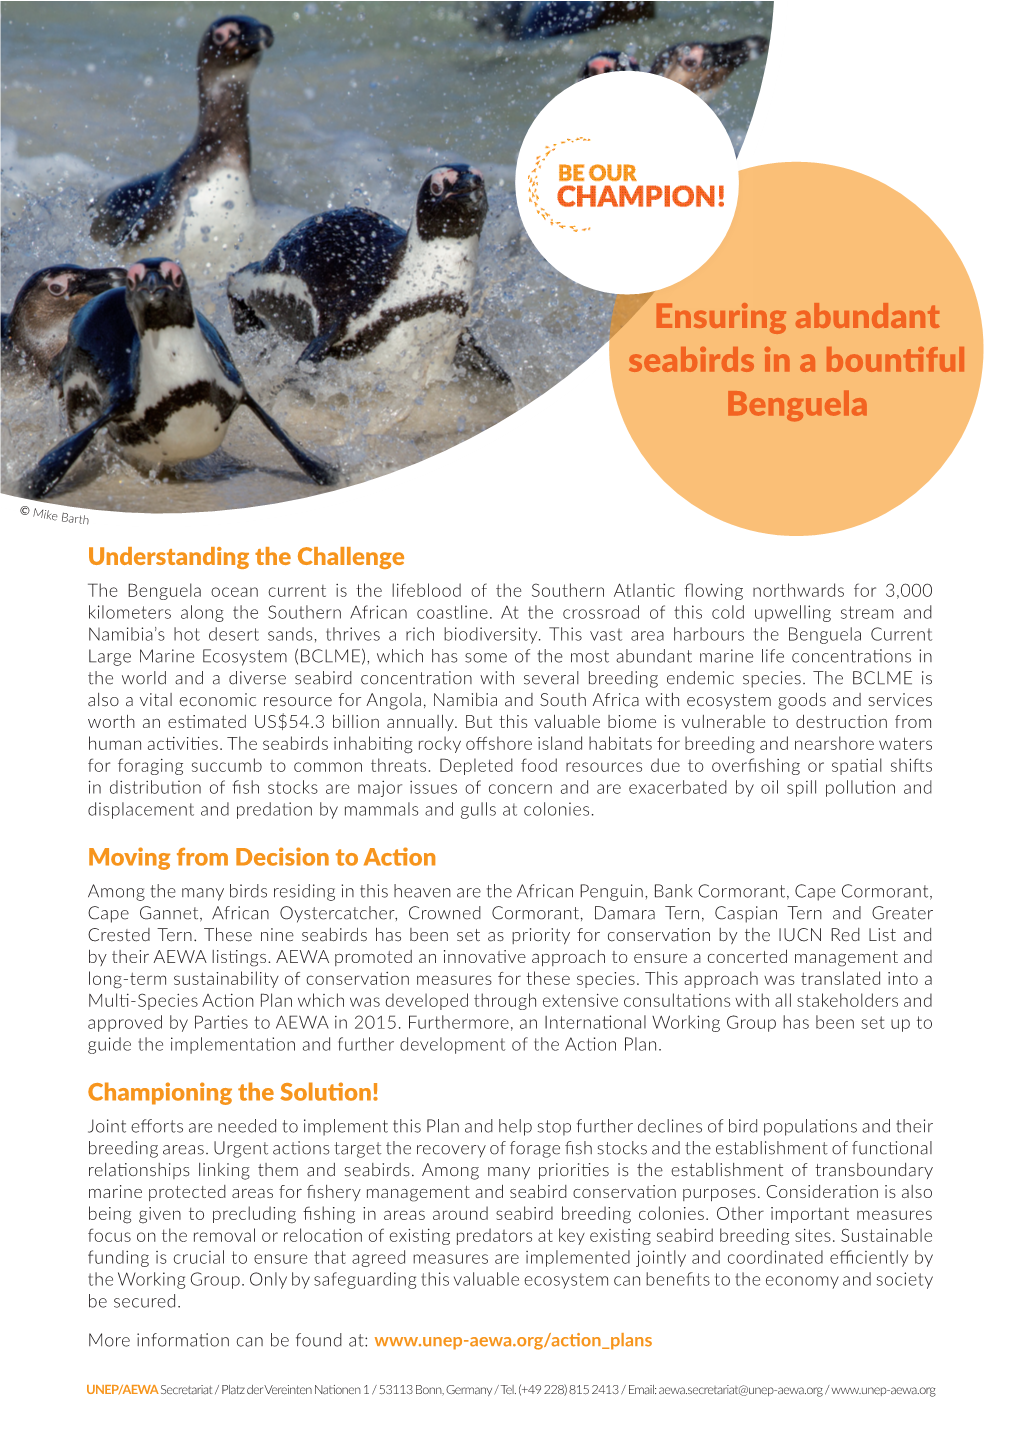 Ensuring Abundant Seabirds in a Bountiful Benguela